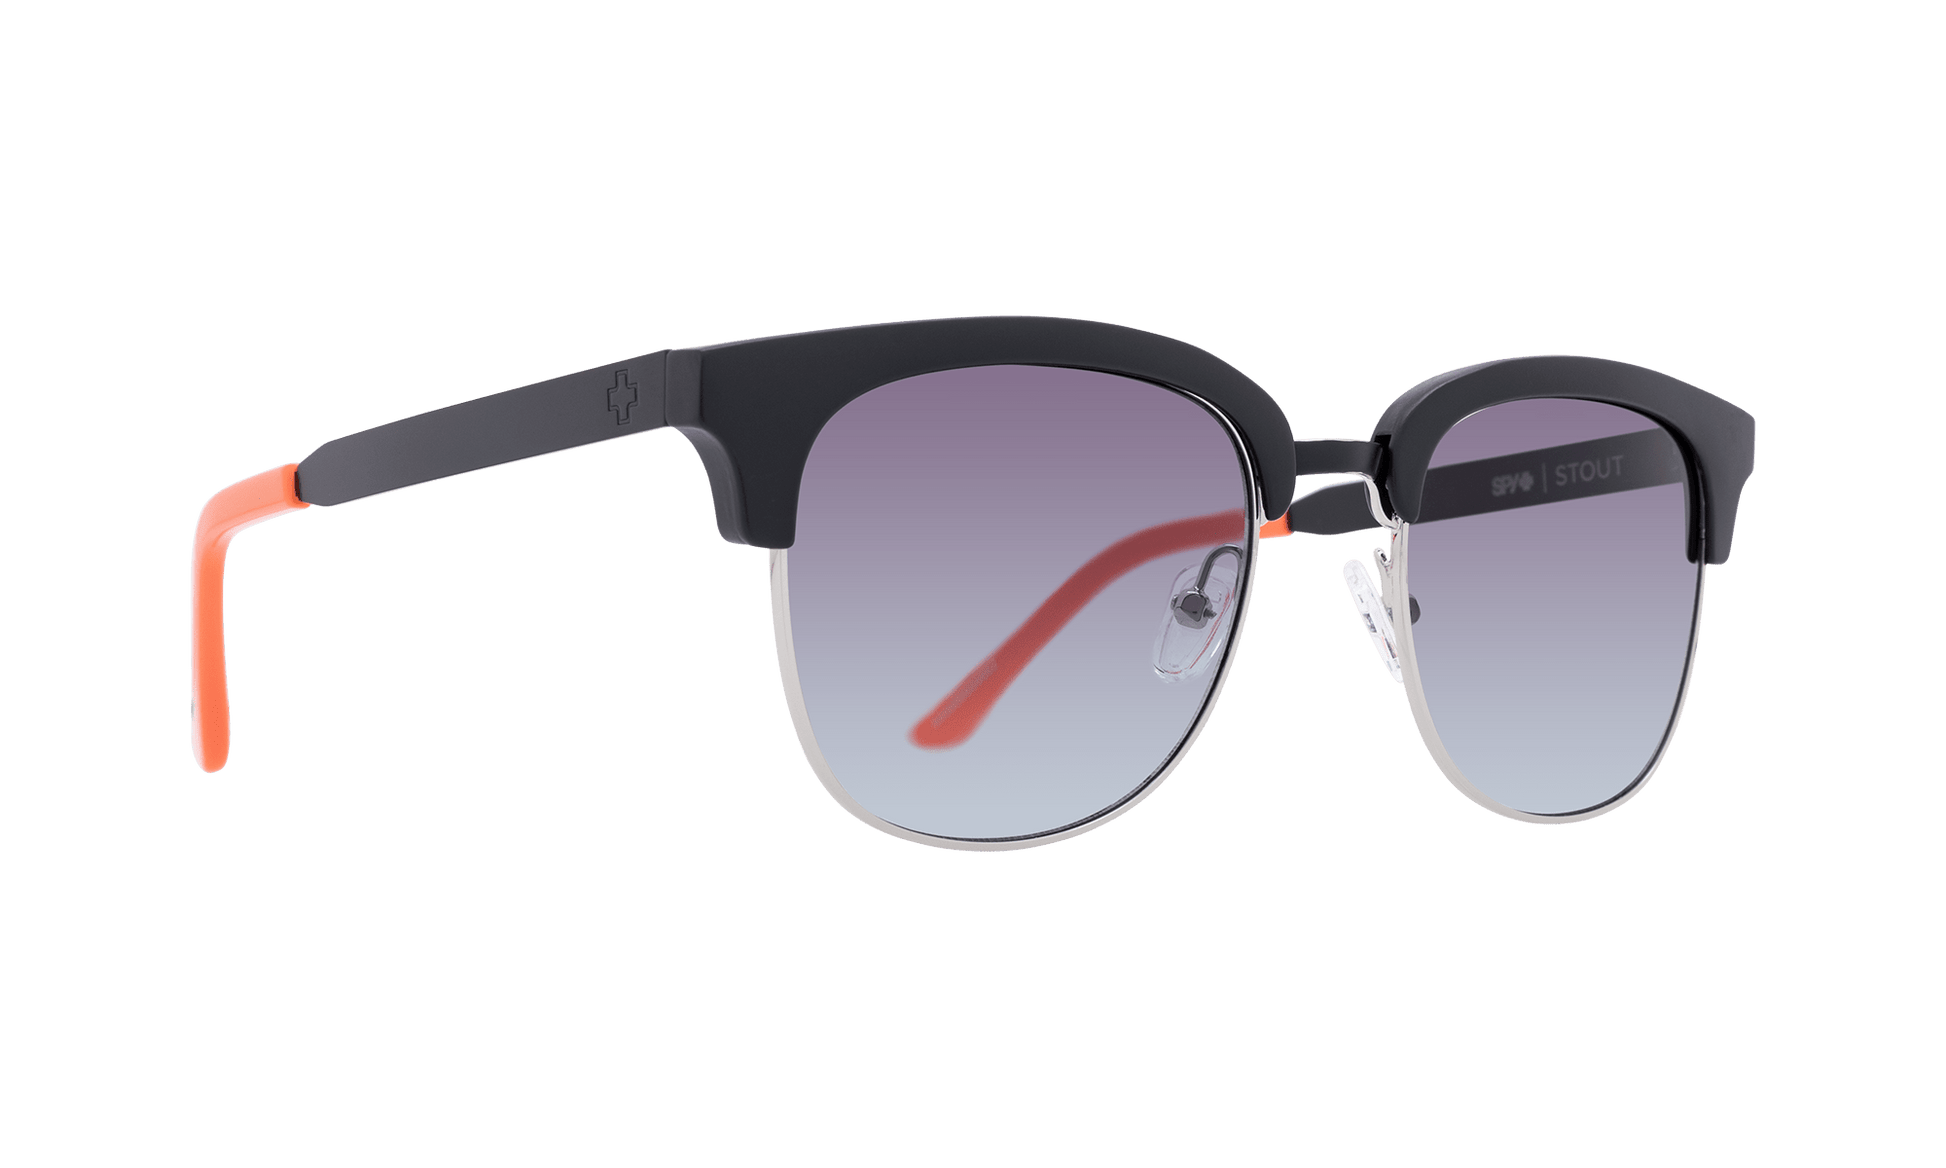 SPY stout Sunglasses  Ocean Fade Matte Black Gloss Tangerine  51-21-147